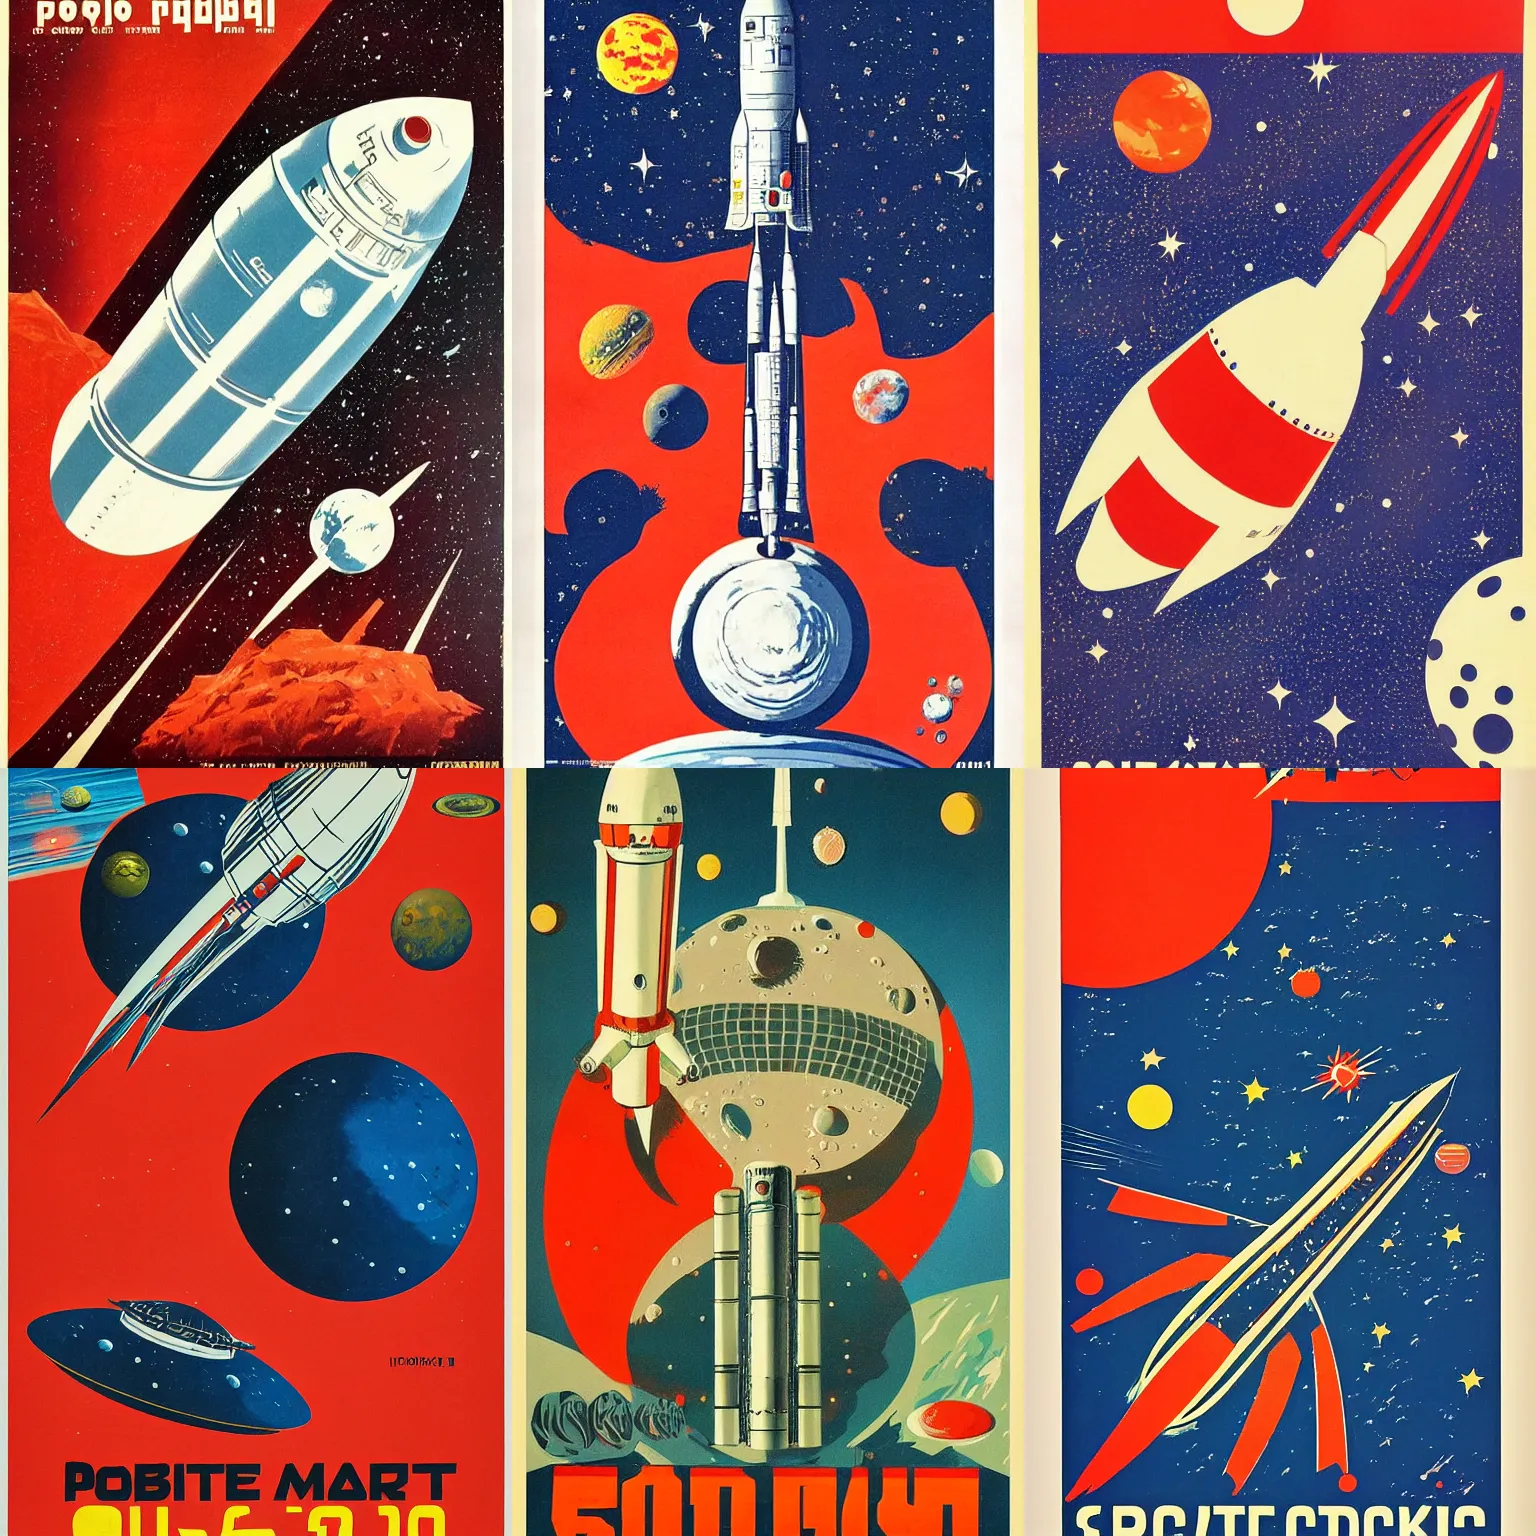 Prompt: Soviet Space craft, planet mars, 60s poster, 1962 Soviet